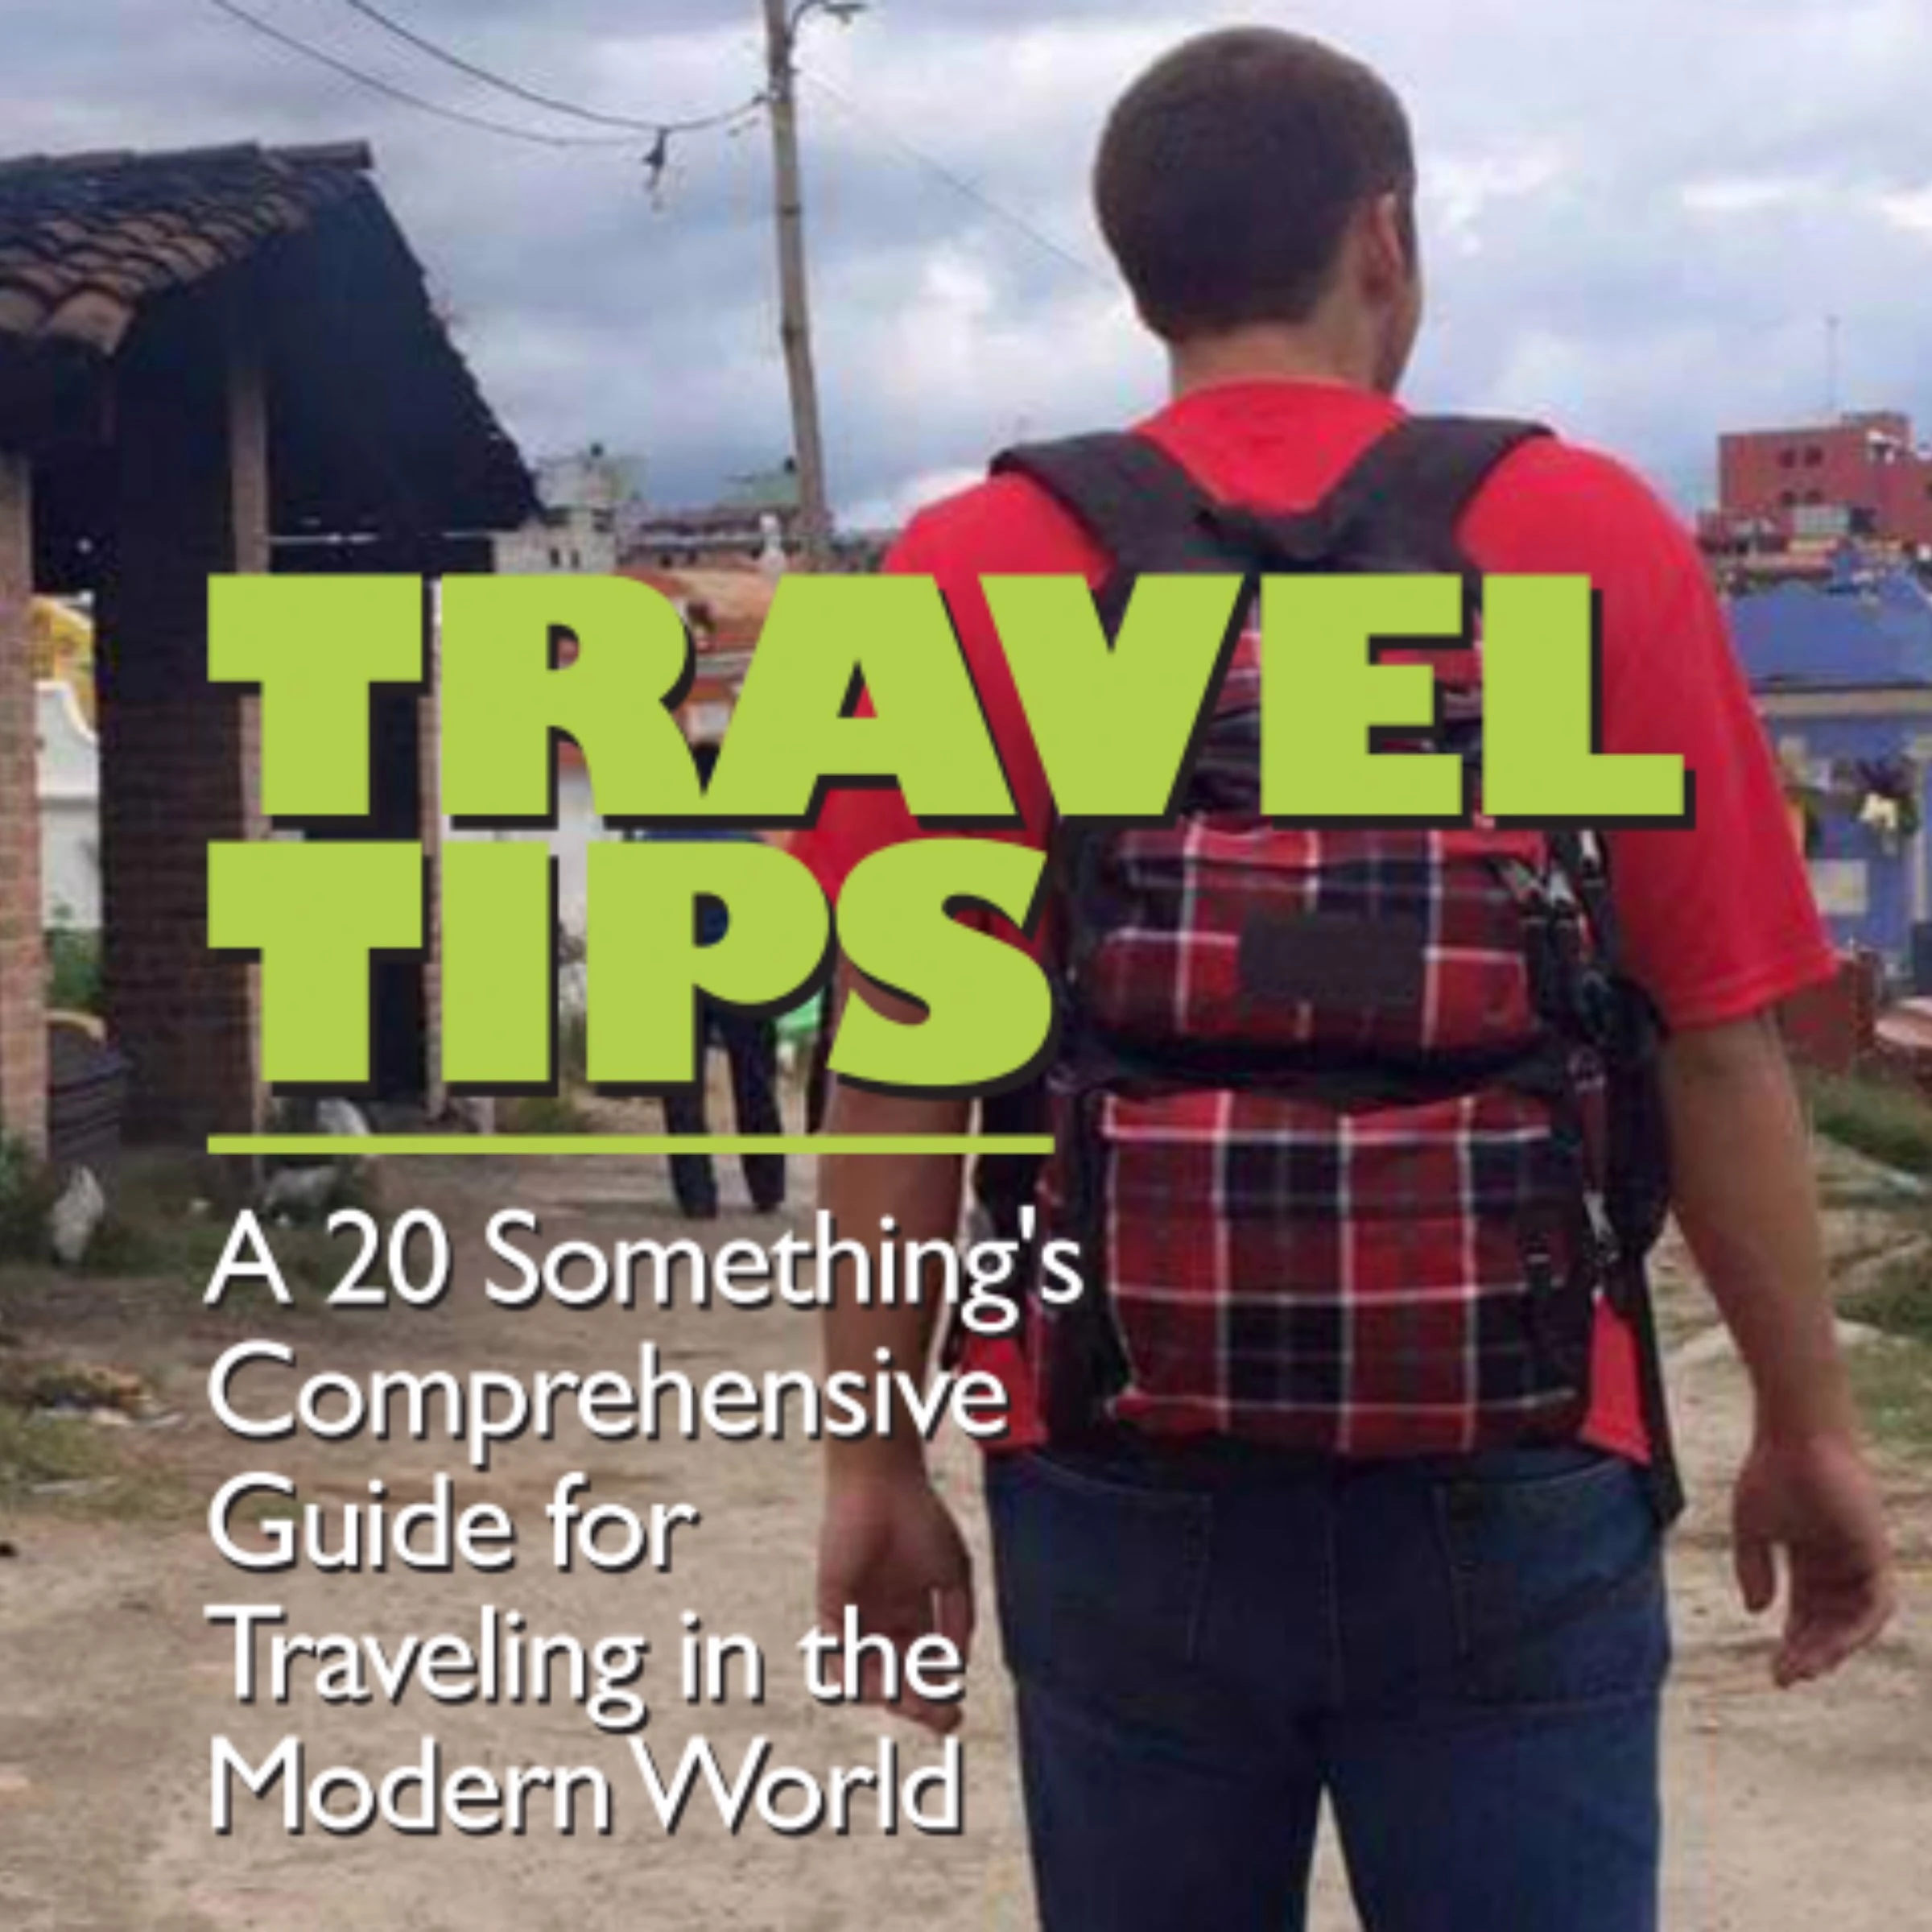 Travel Tips by Kyle Rasmussen Audiobook